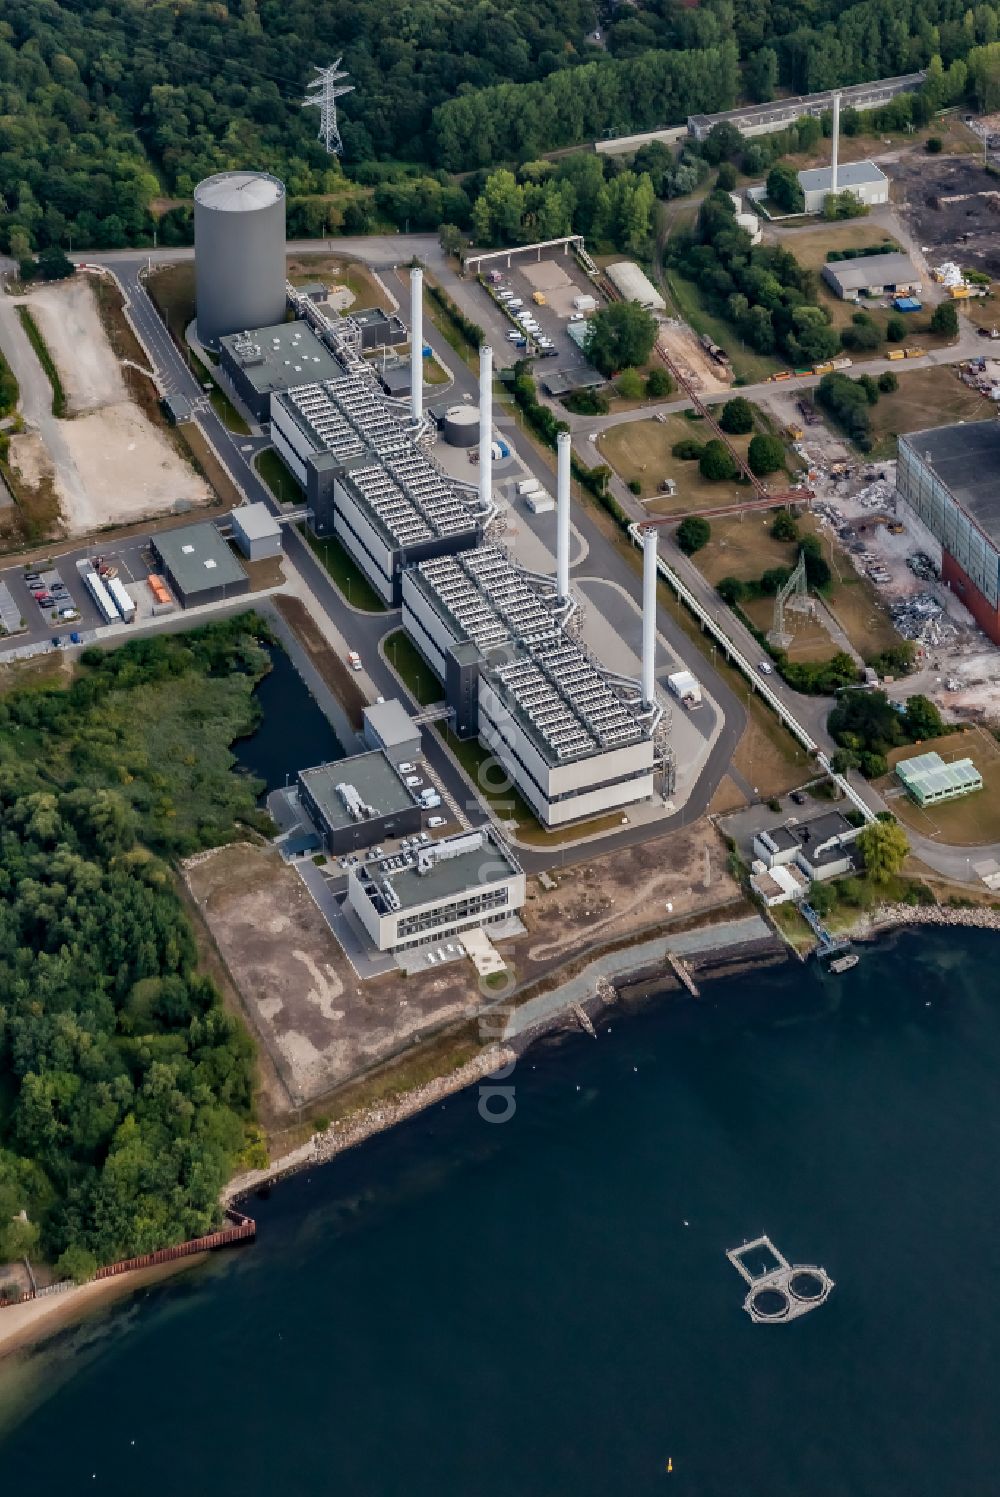 Aerial image Kiel - Power plants Coastal power plant Kiel on the east bank of Kiel in the district Neumuehlen-Dietrichsdorf in Kiel in the state Schleswig-Holstein, Germany